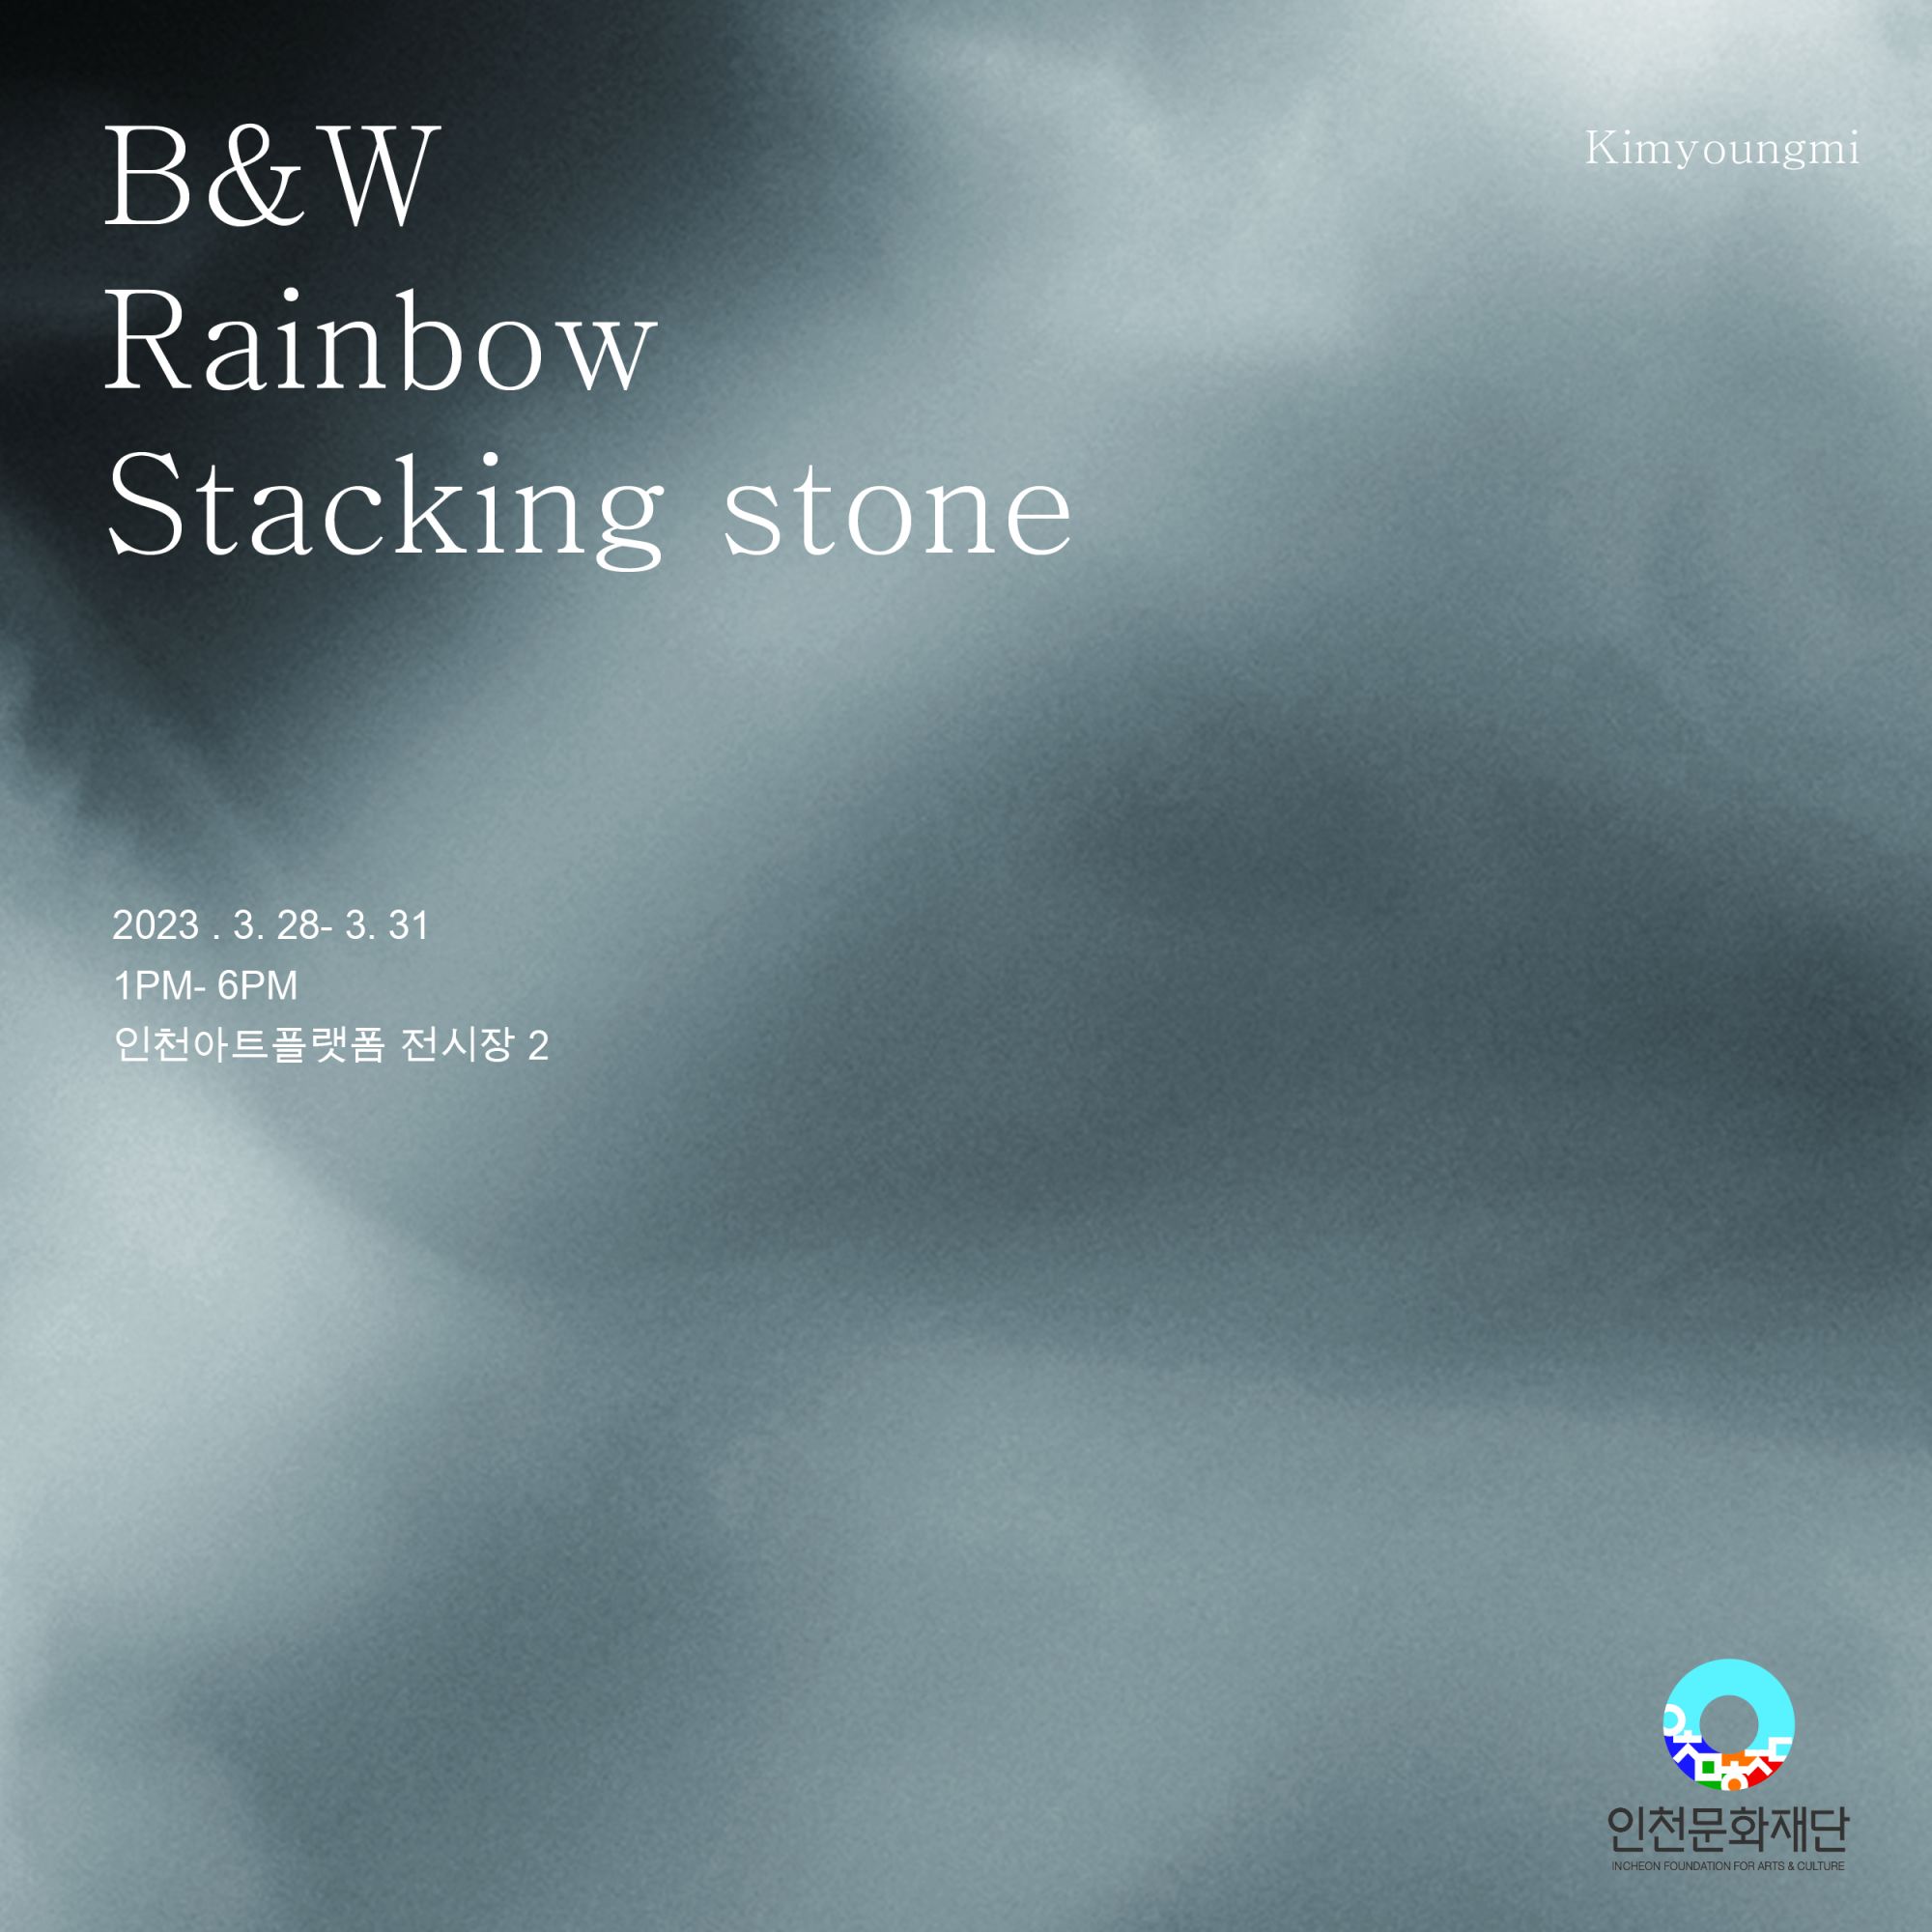 B&W rainbow, stacking stone